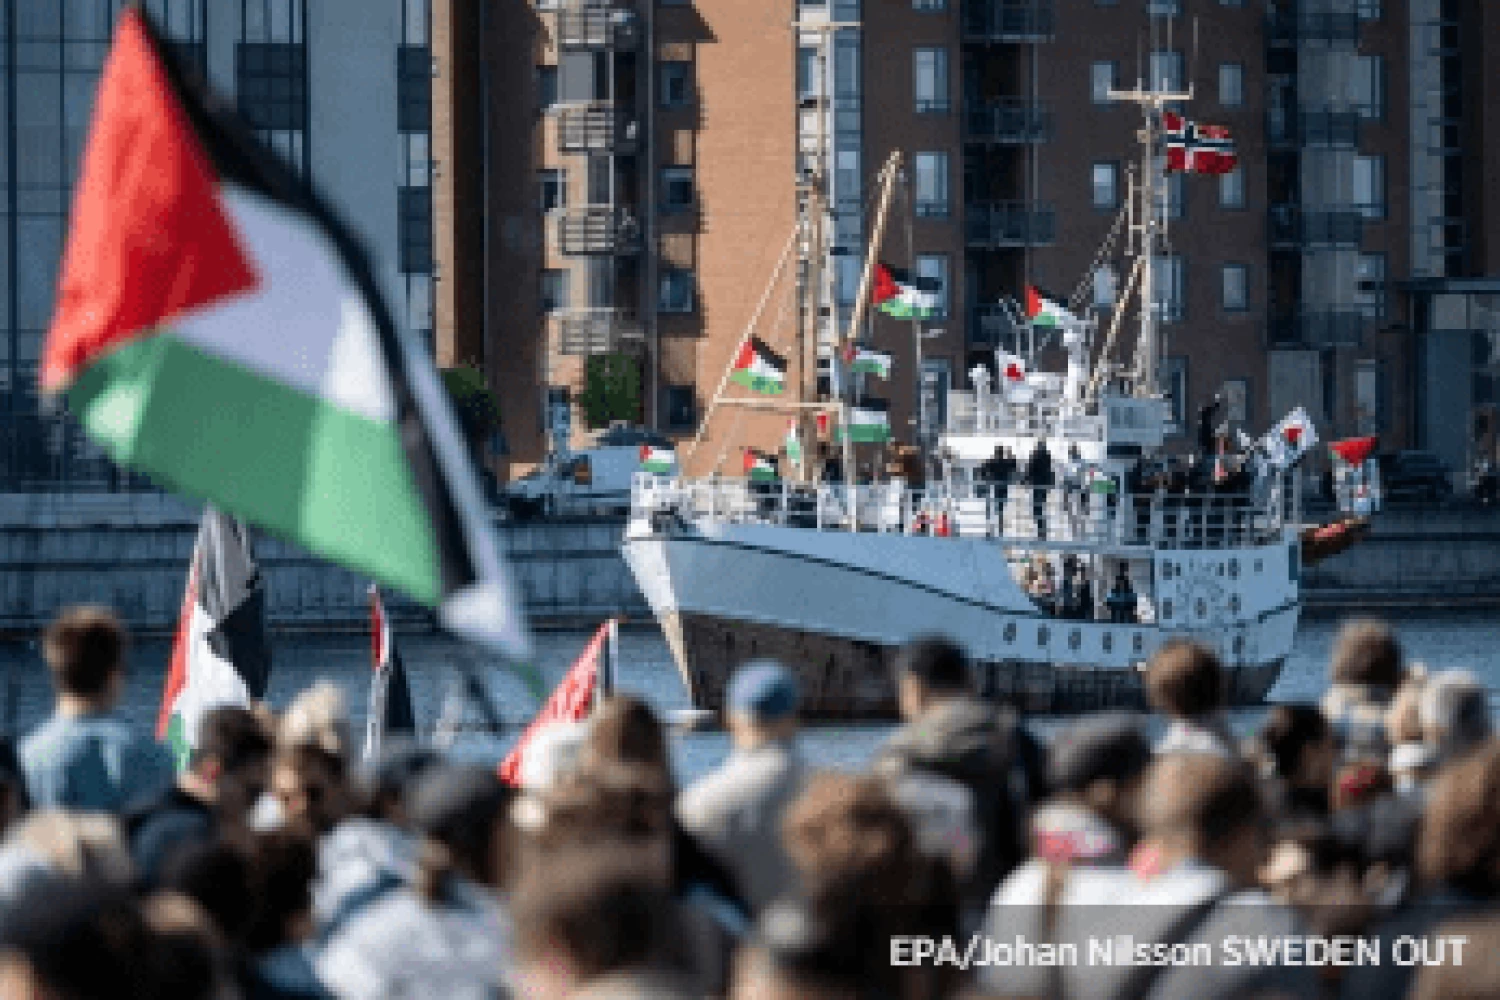 Eurovision: Πλοίο με ανθρωπιστική βοήθεια προς Γάζα αγκυροβόλησε στο λιμάνι του Μάλμε